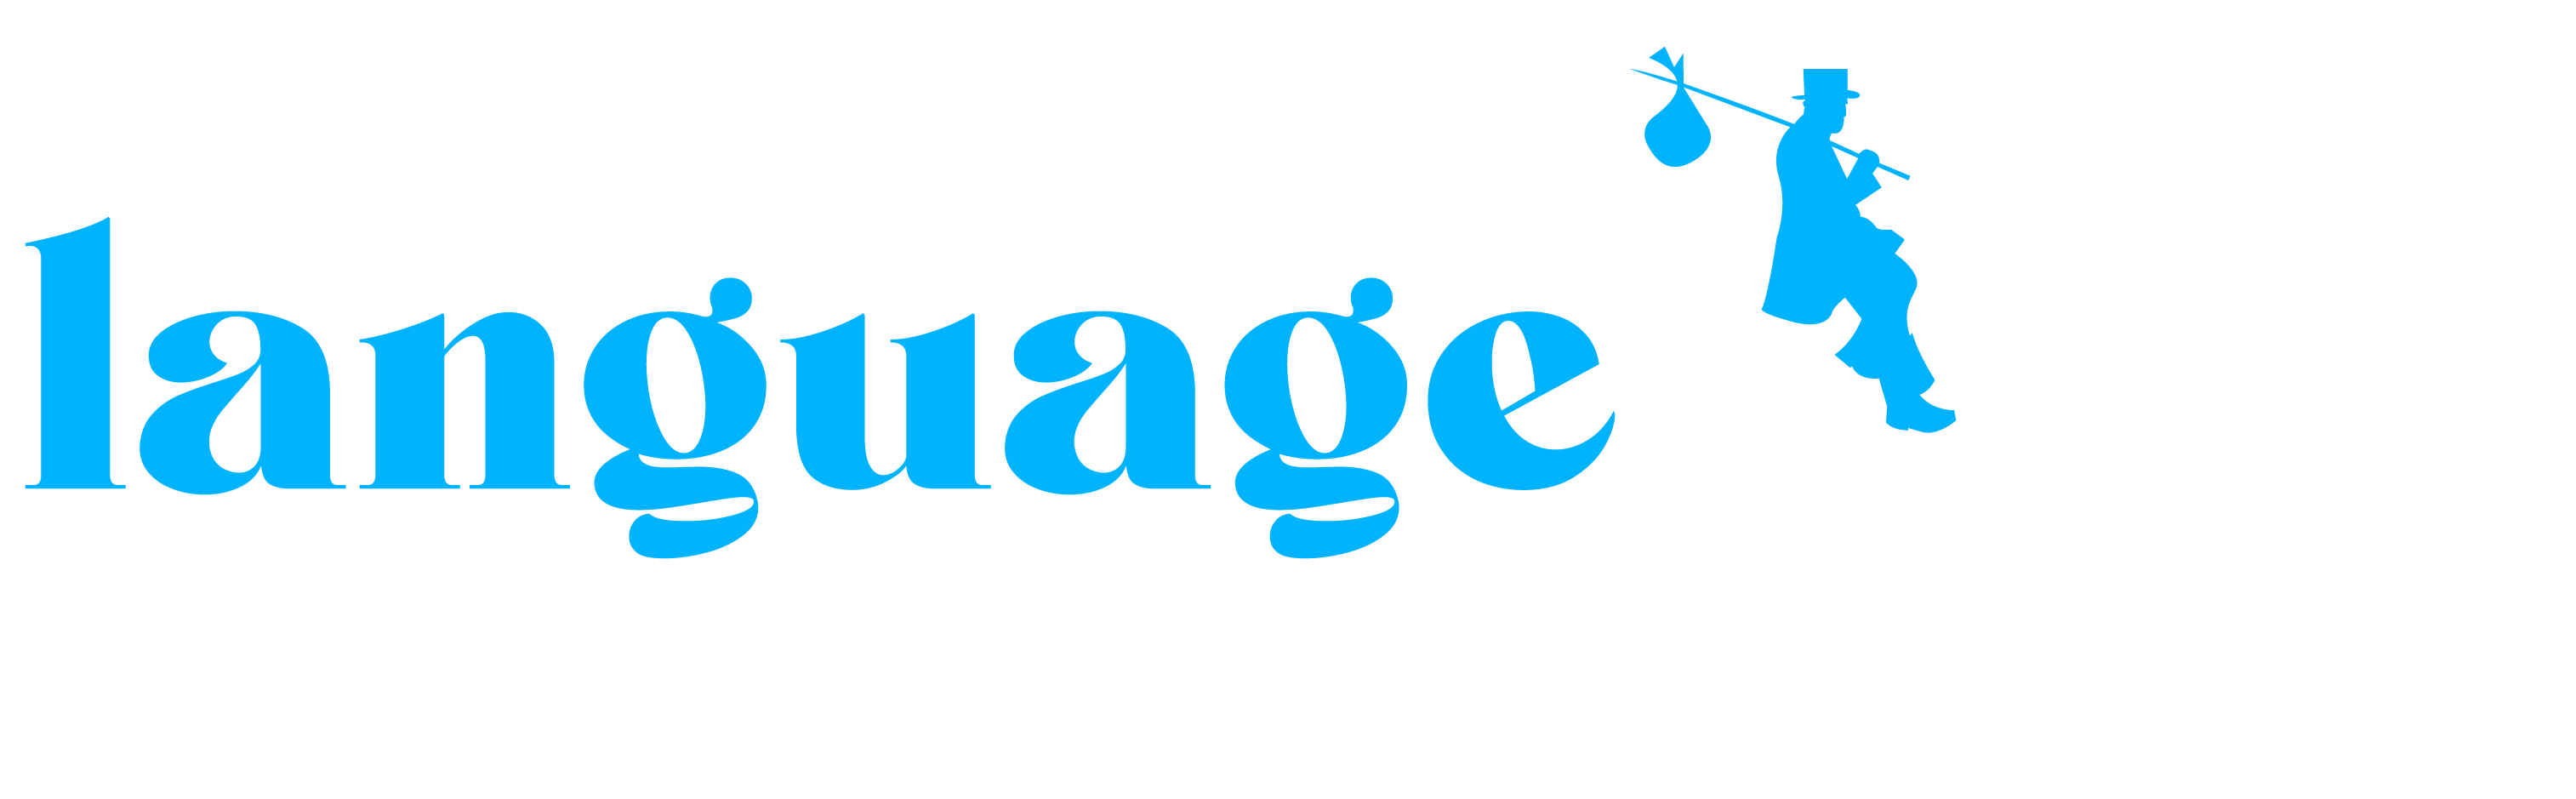 Language Hobo Logo